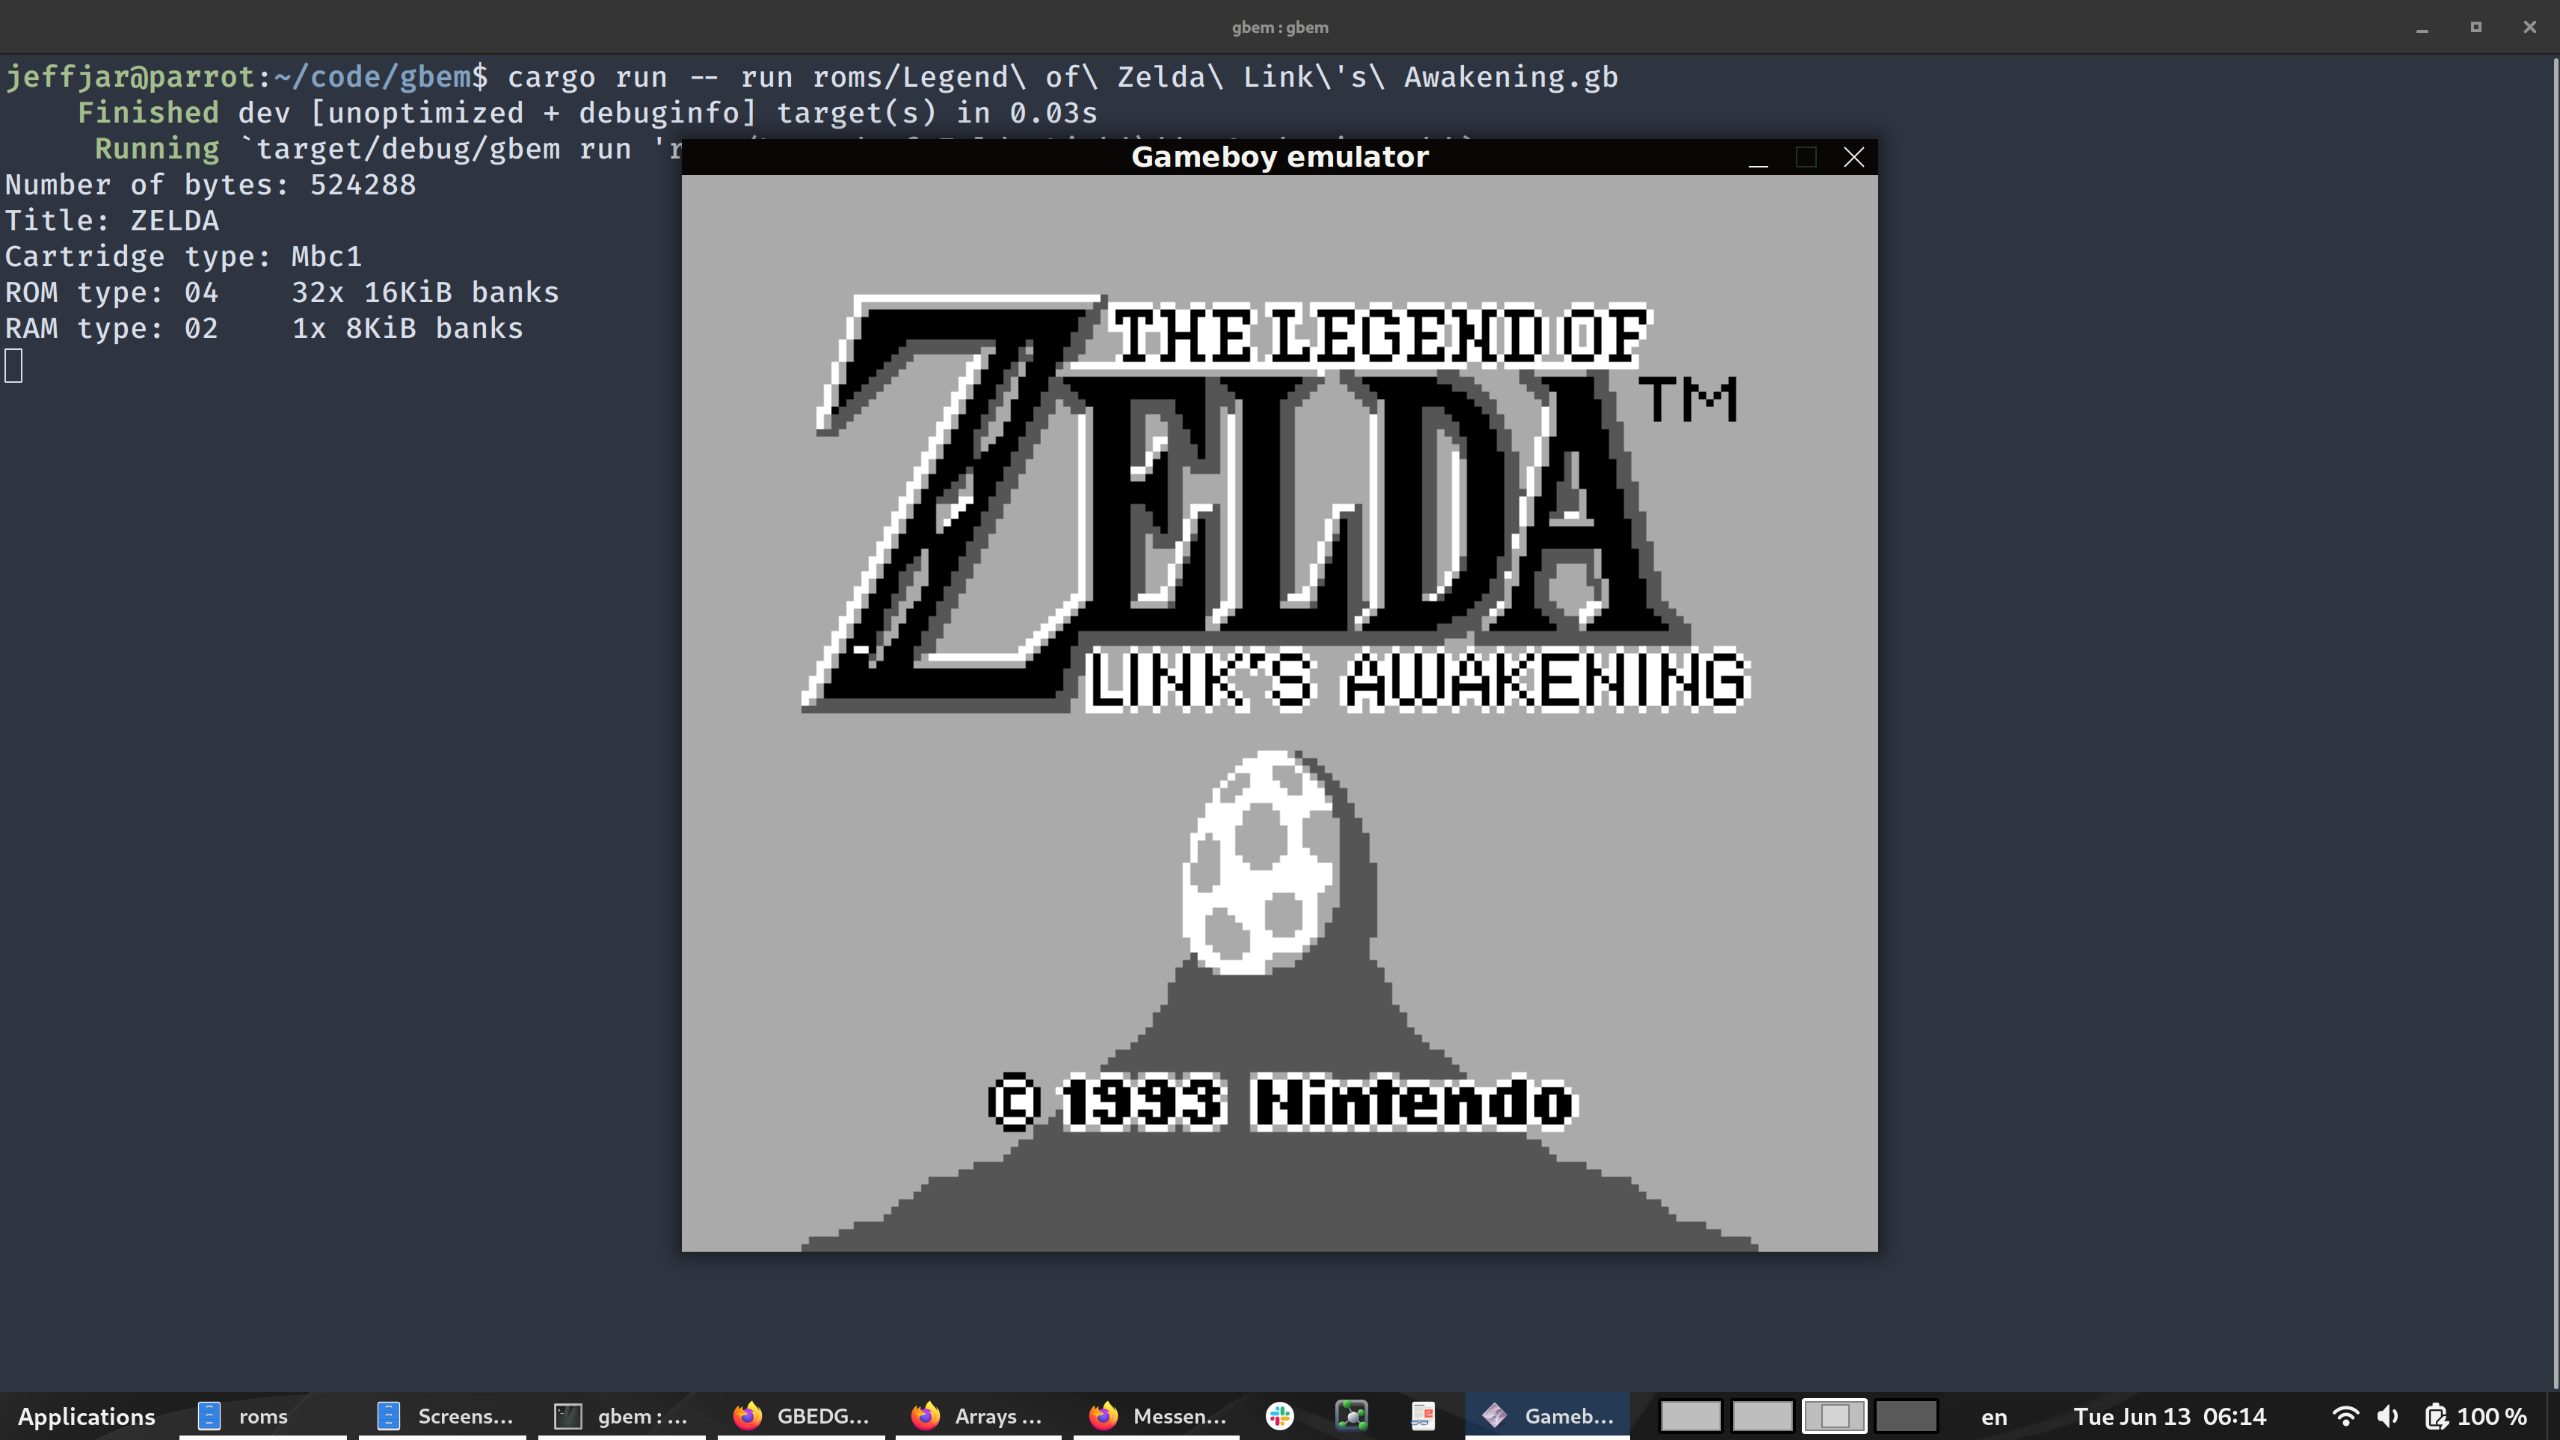 Screenshot of the emulator playing the title screen of The Legend of Zelda, Link's Awakening